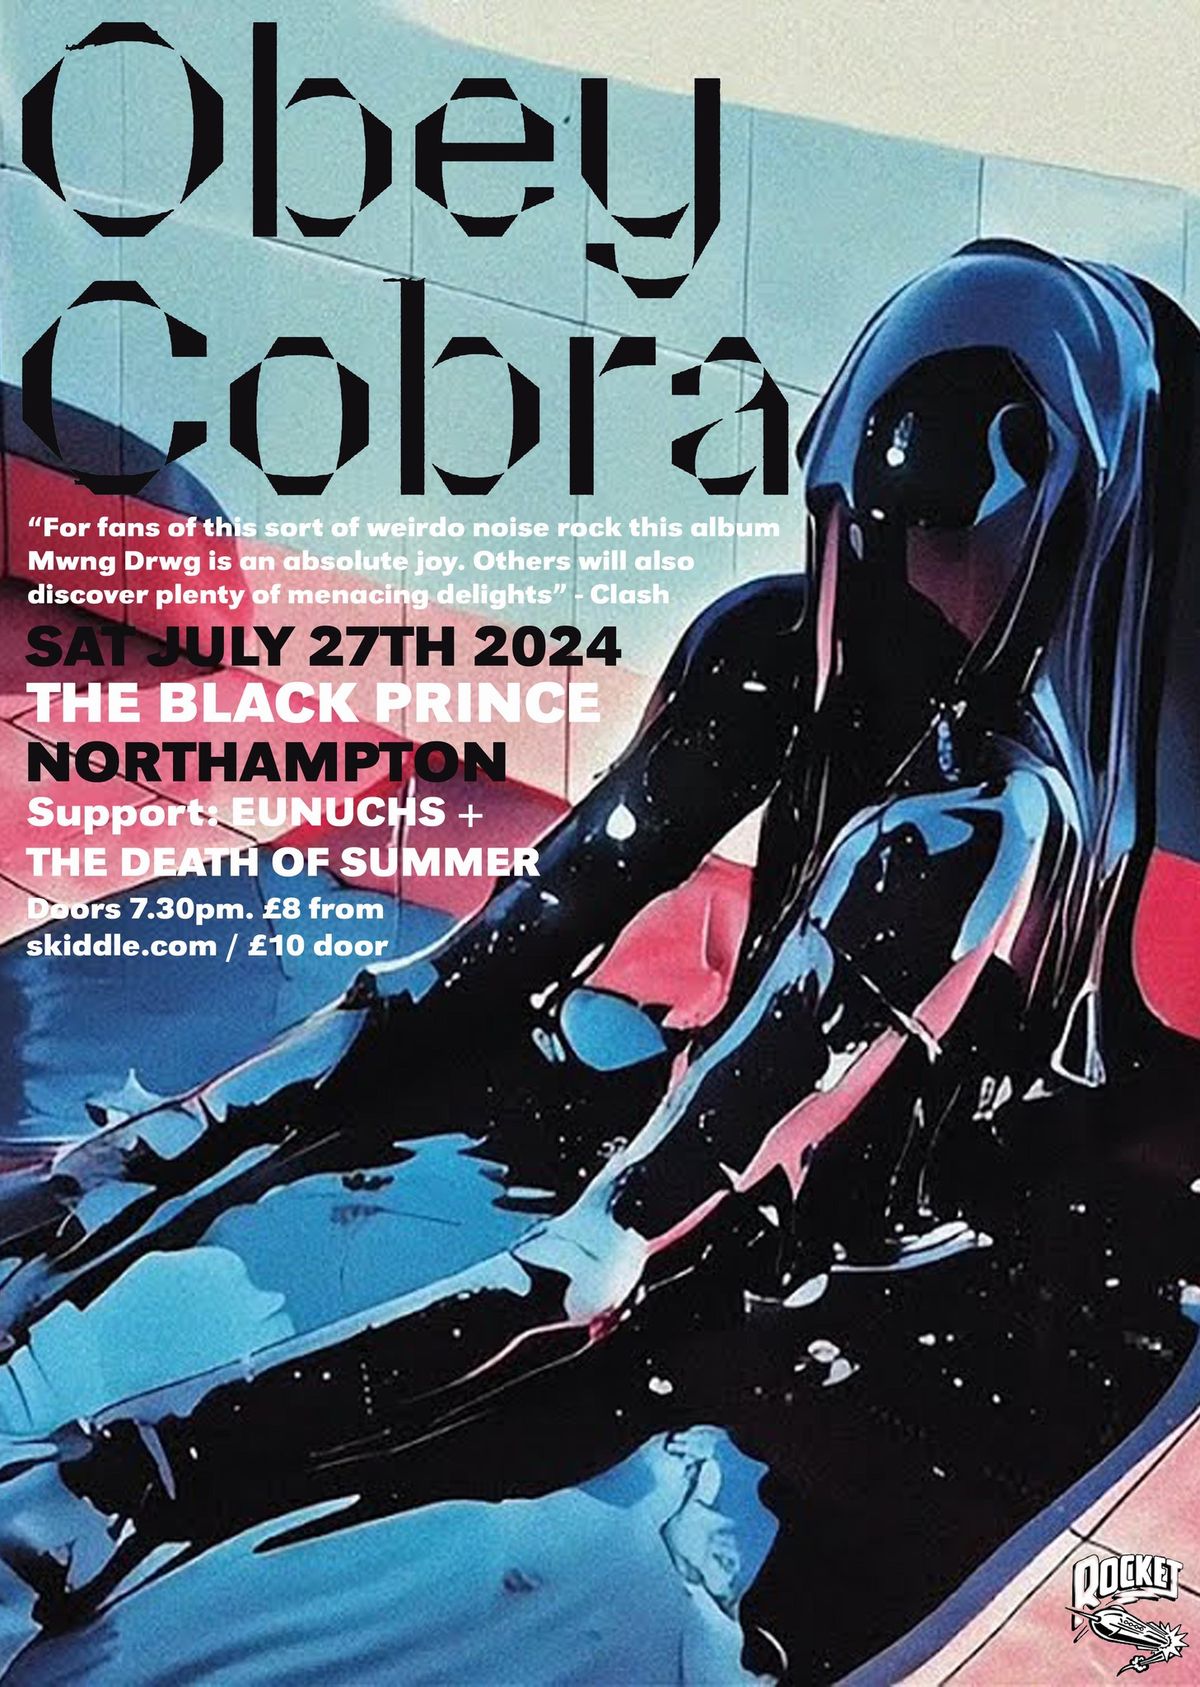 Obey Cobra [Rocket Recordings] + Eunuchs + The Death of Summer | The Black Prince, Northampton